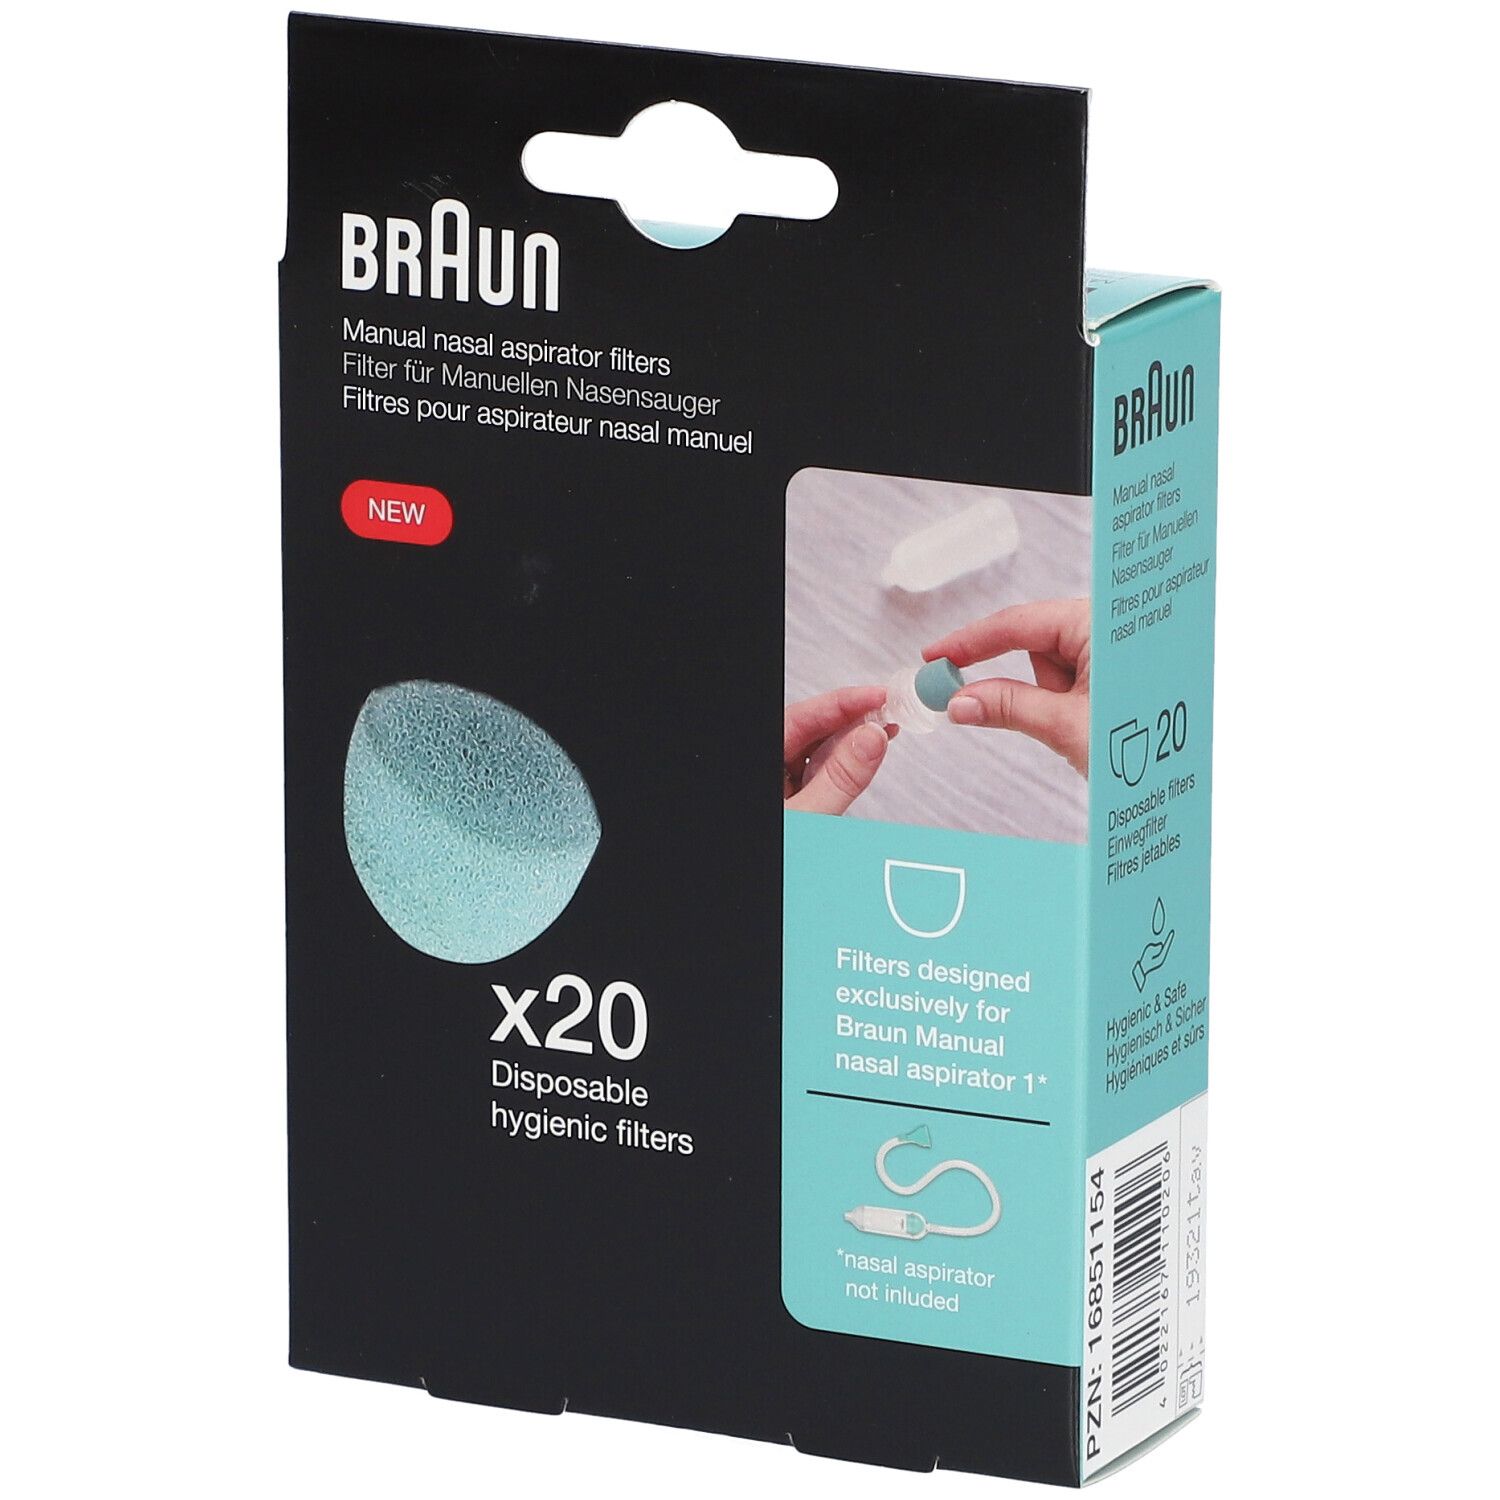 Braun Aspirateur nasal manuel Filtre de rechange